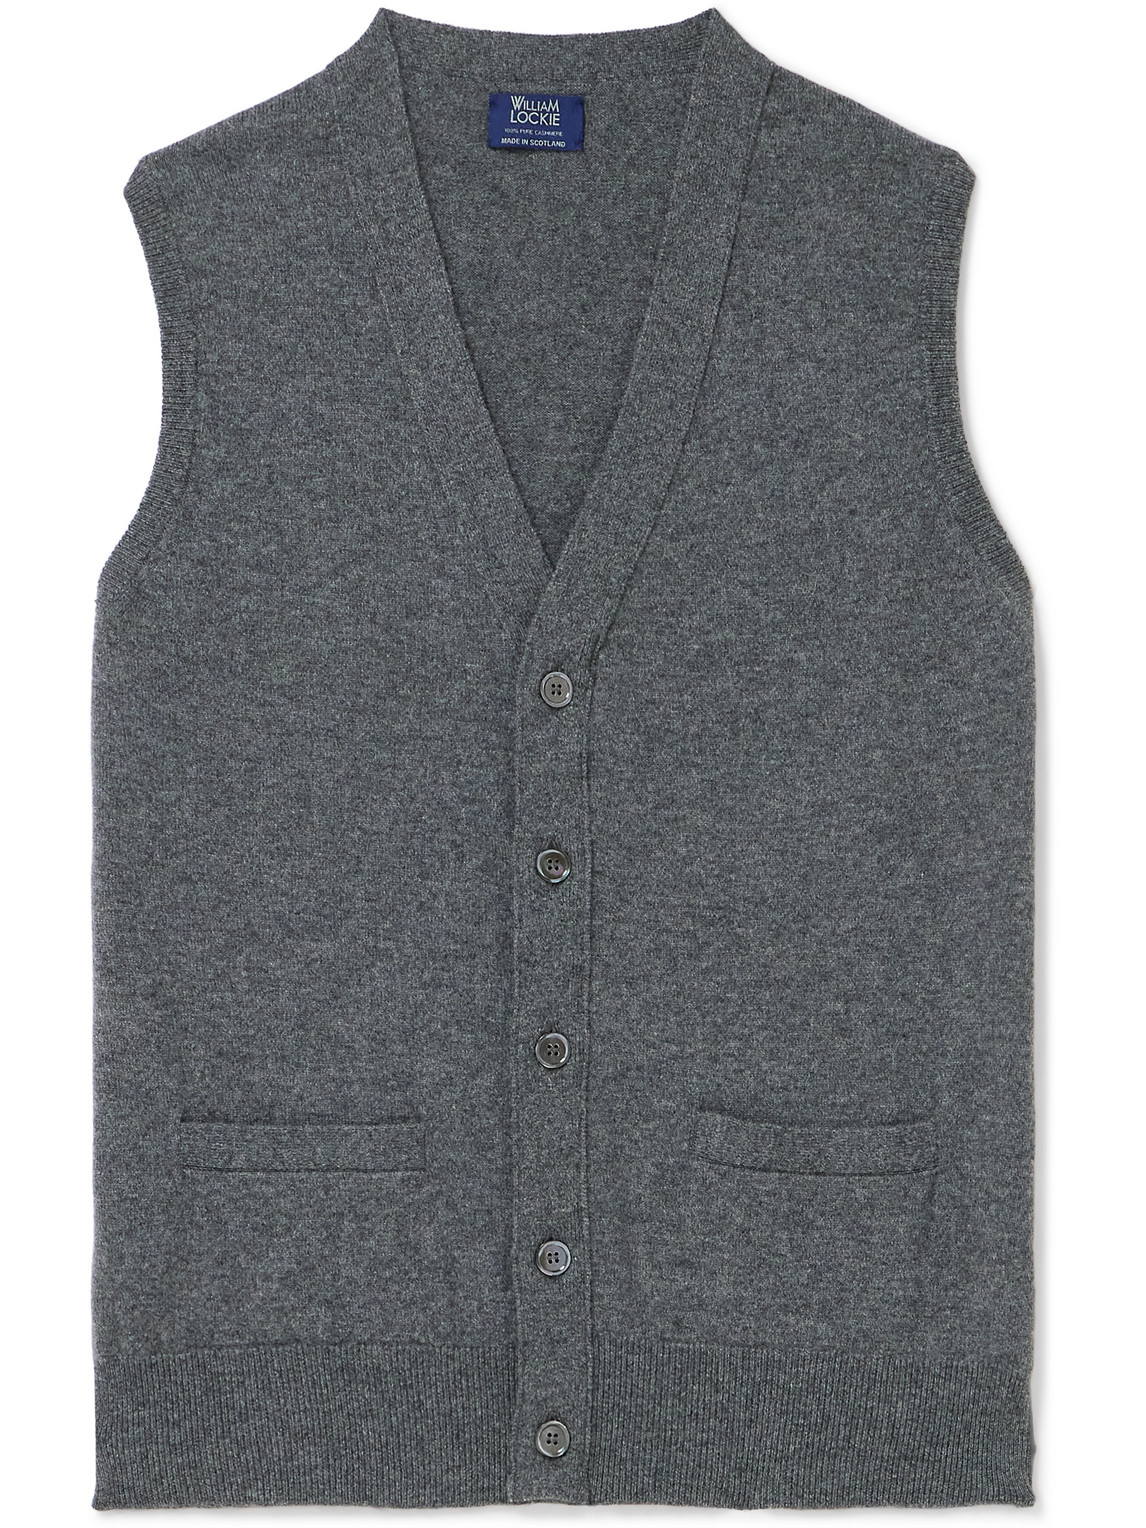 William Lockie - Oxton Cashmere Sweater Vest - Men - Gray - S for ผู้ชาย